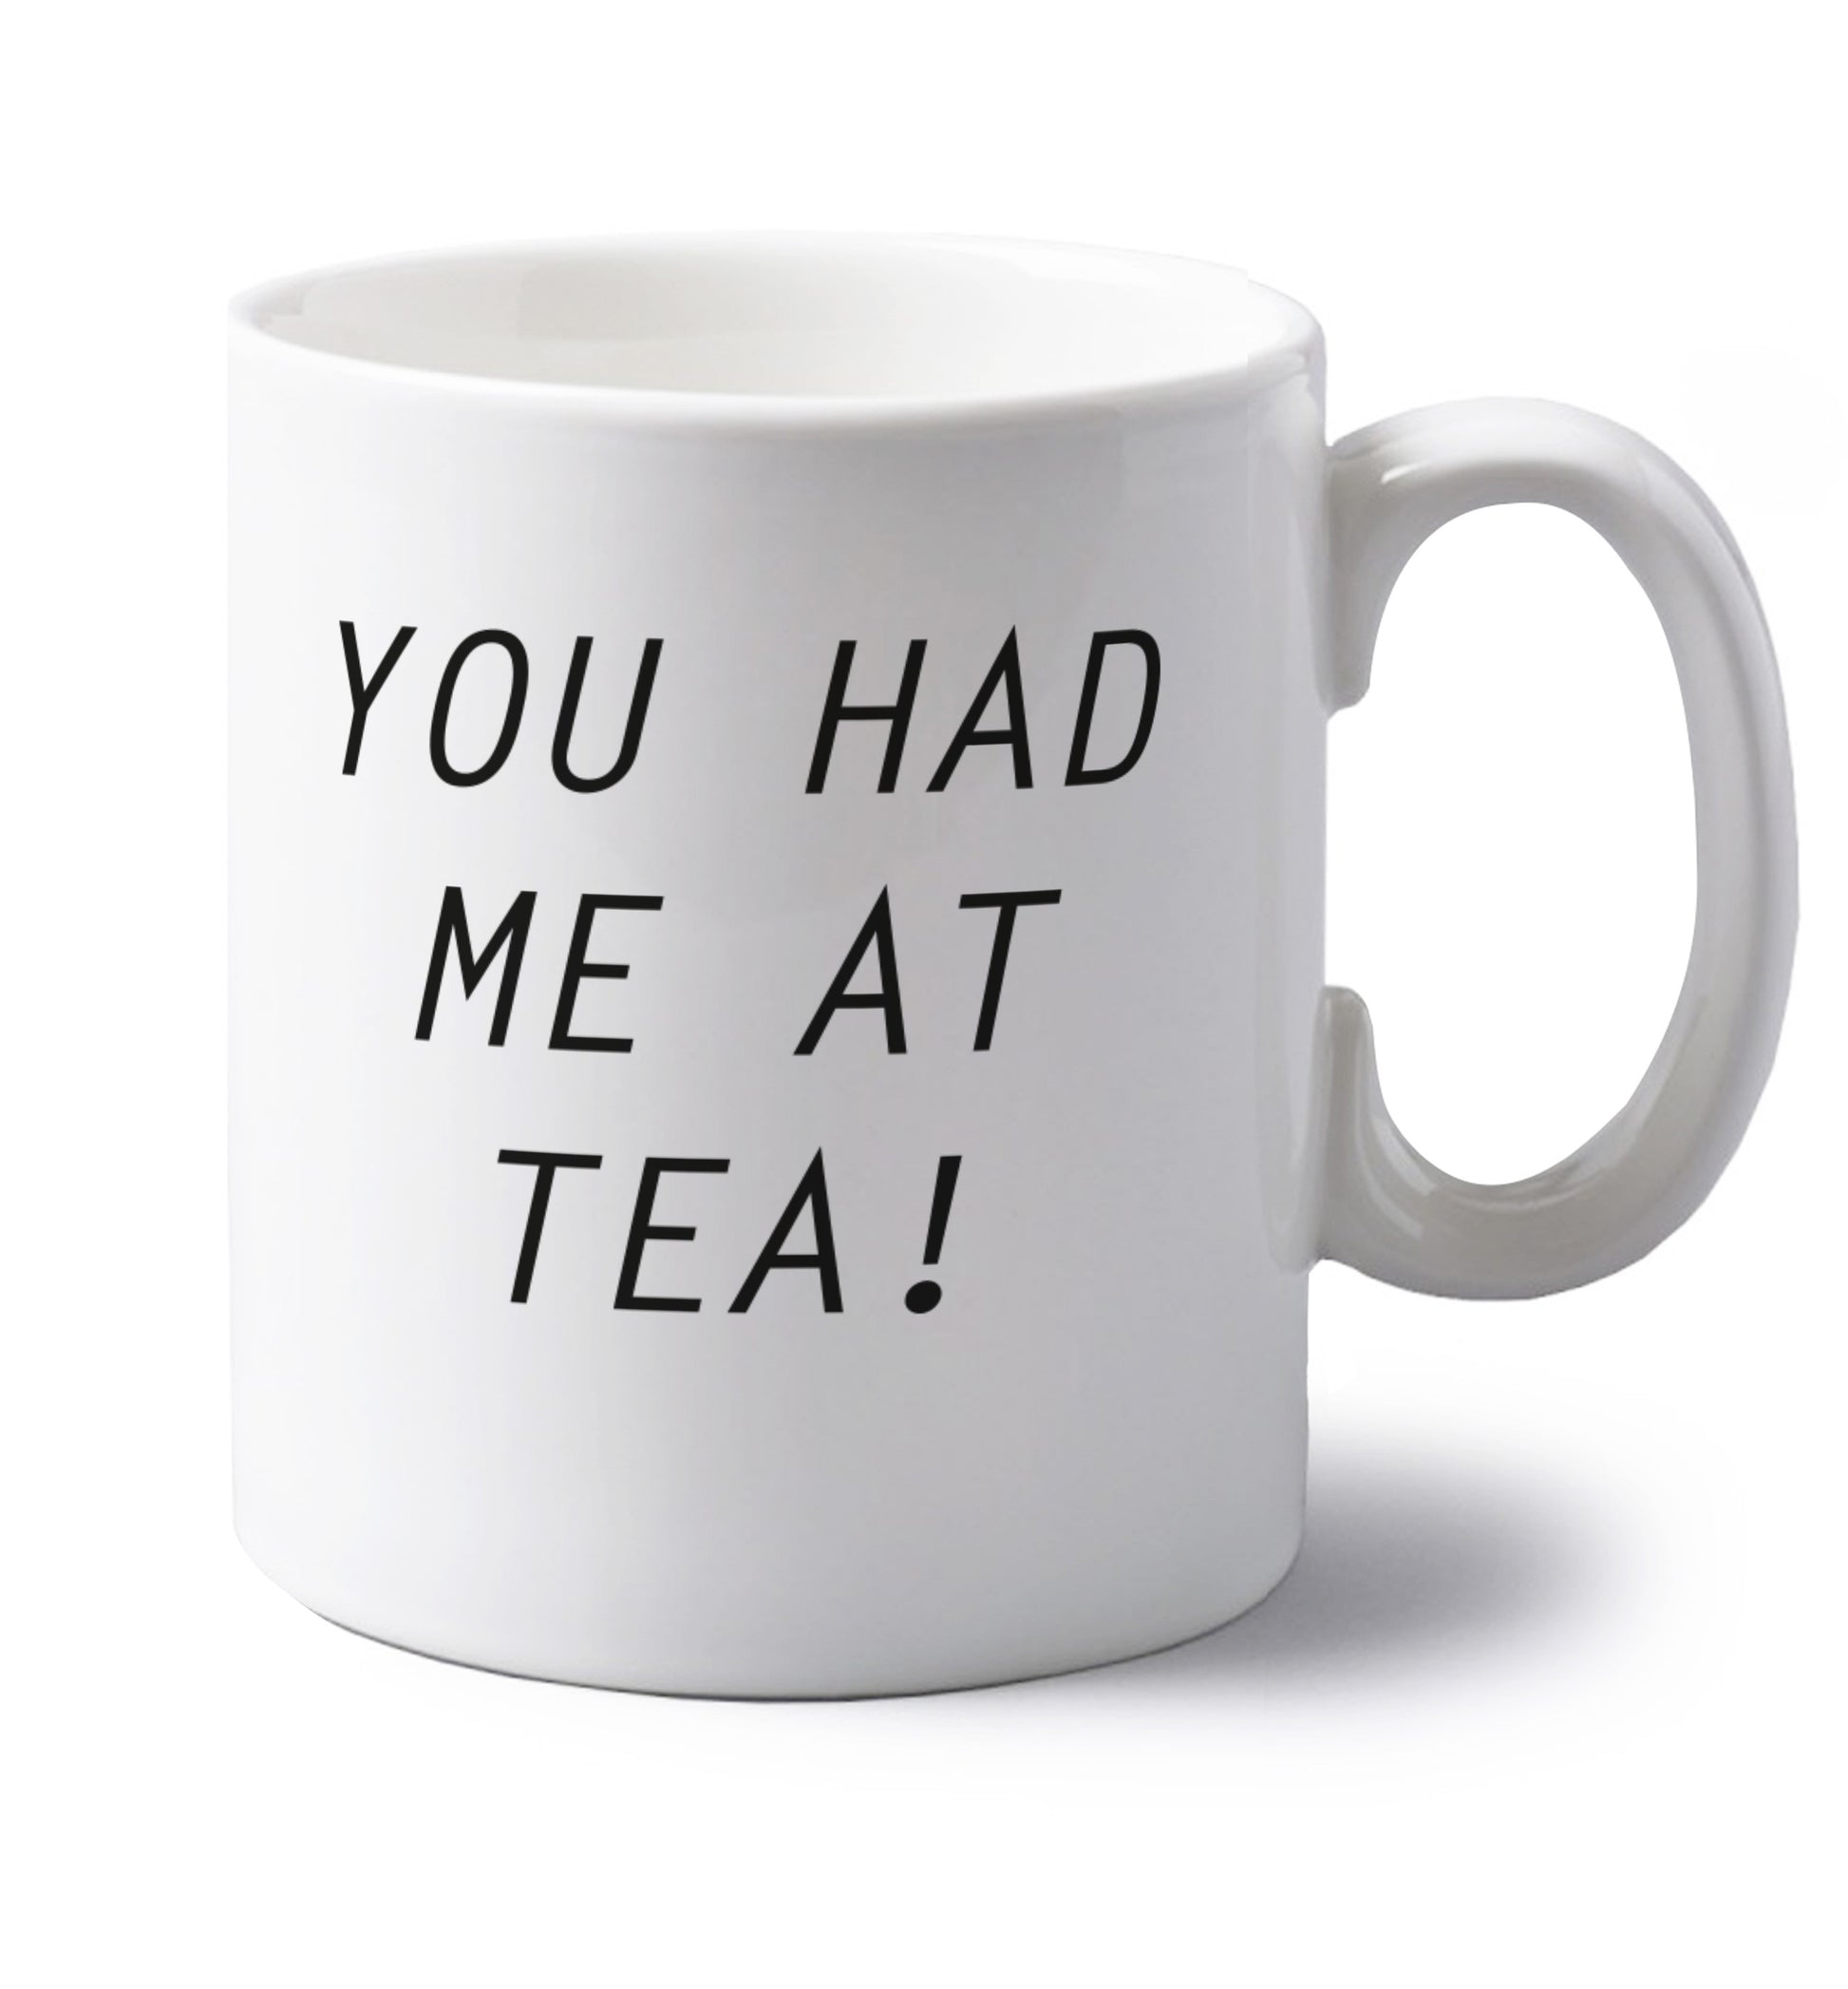 You had me at tea left handed white ceramic mug 